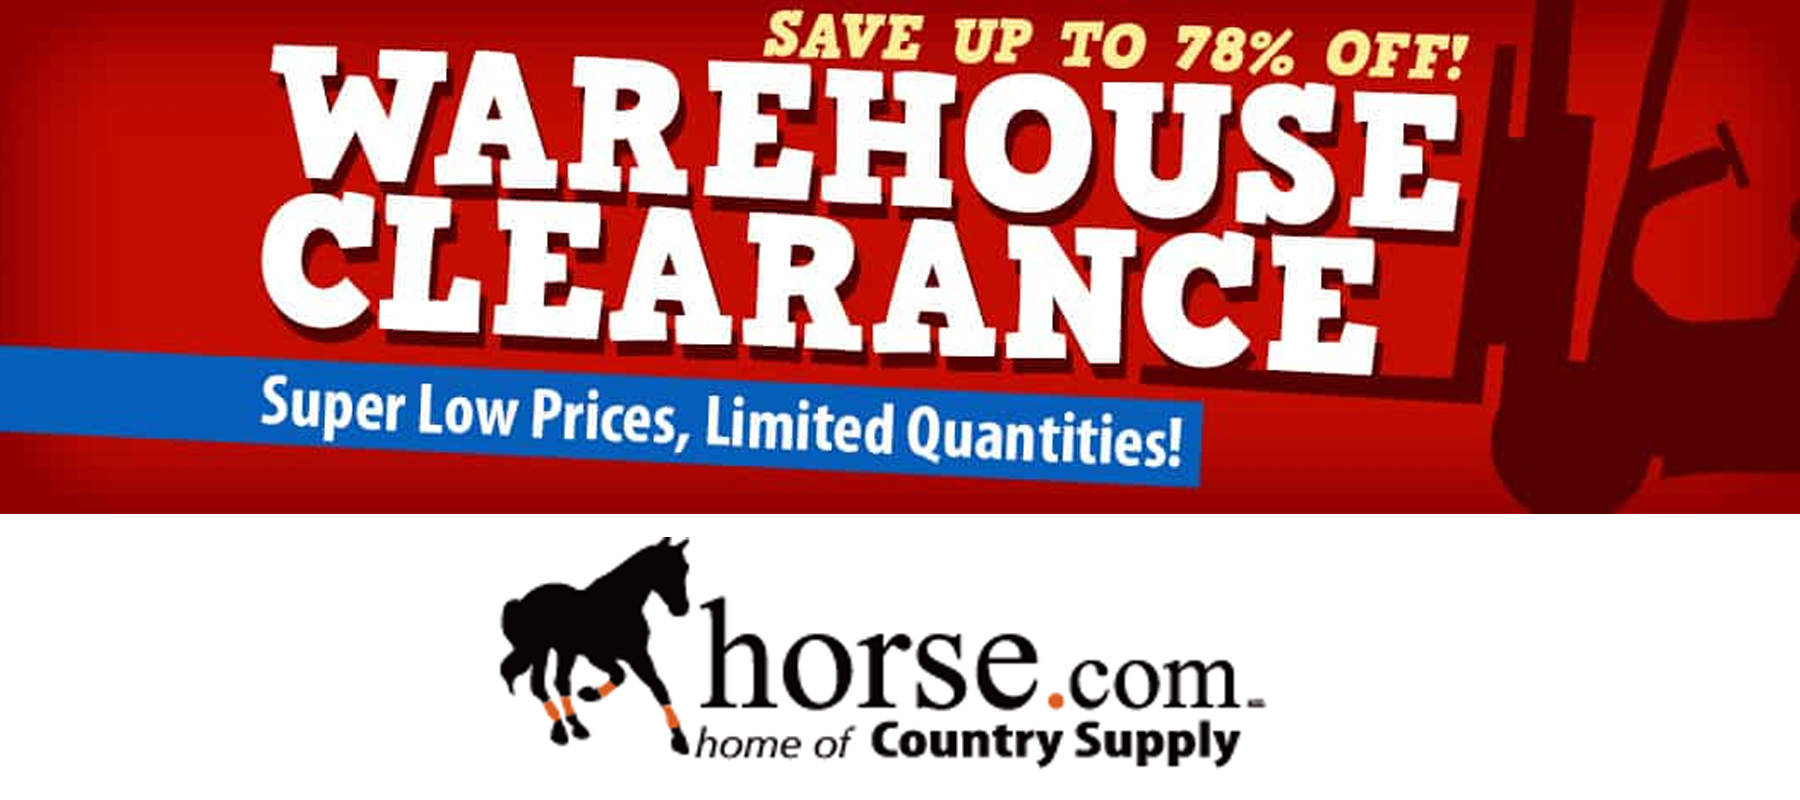 Horse.com is having a HUGE Warehouse Sale!